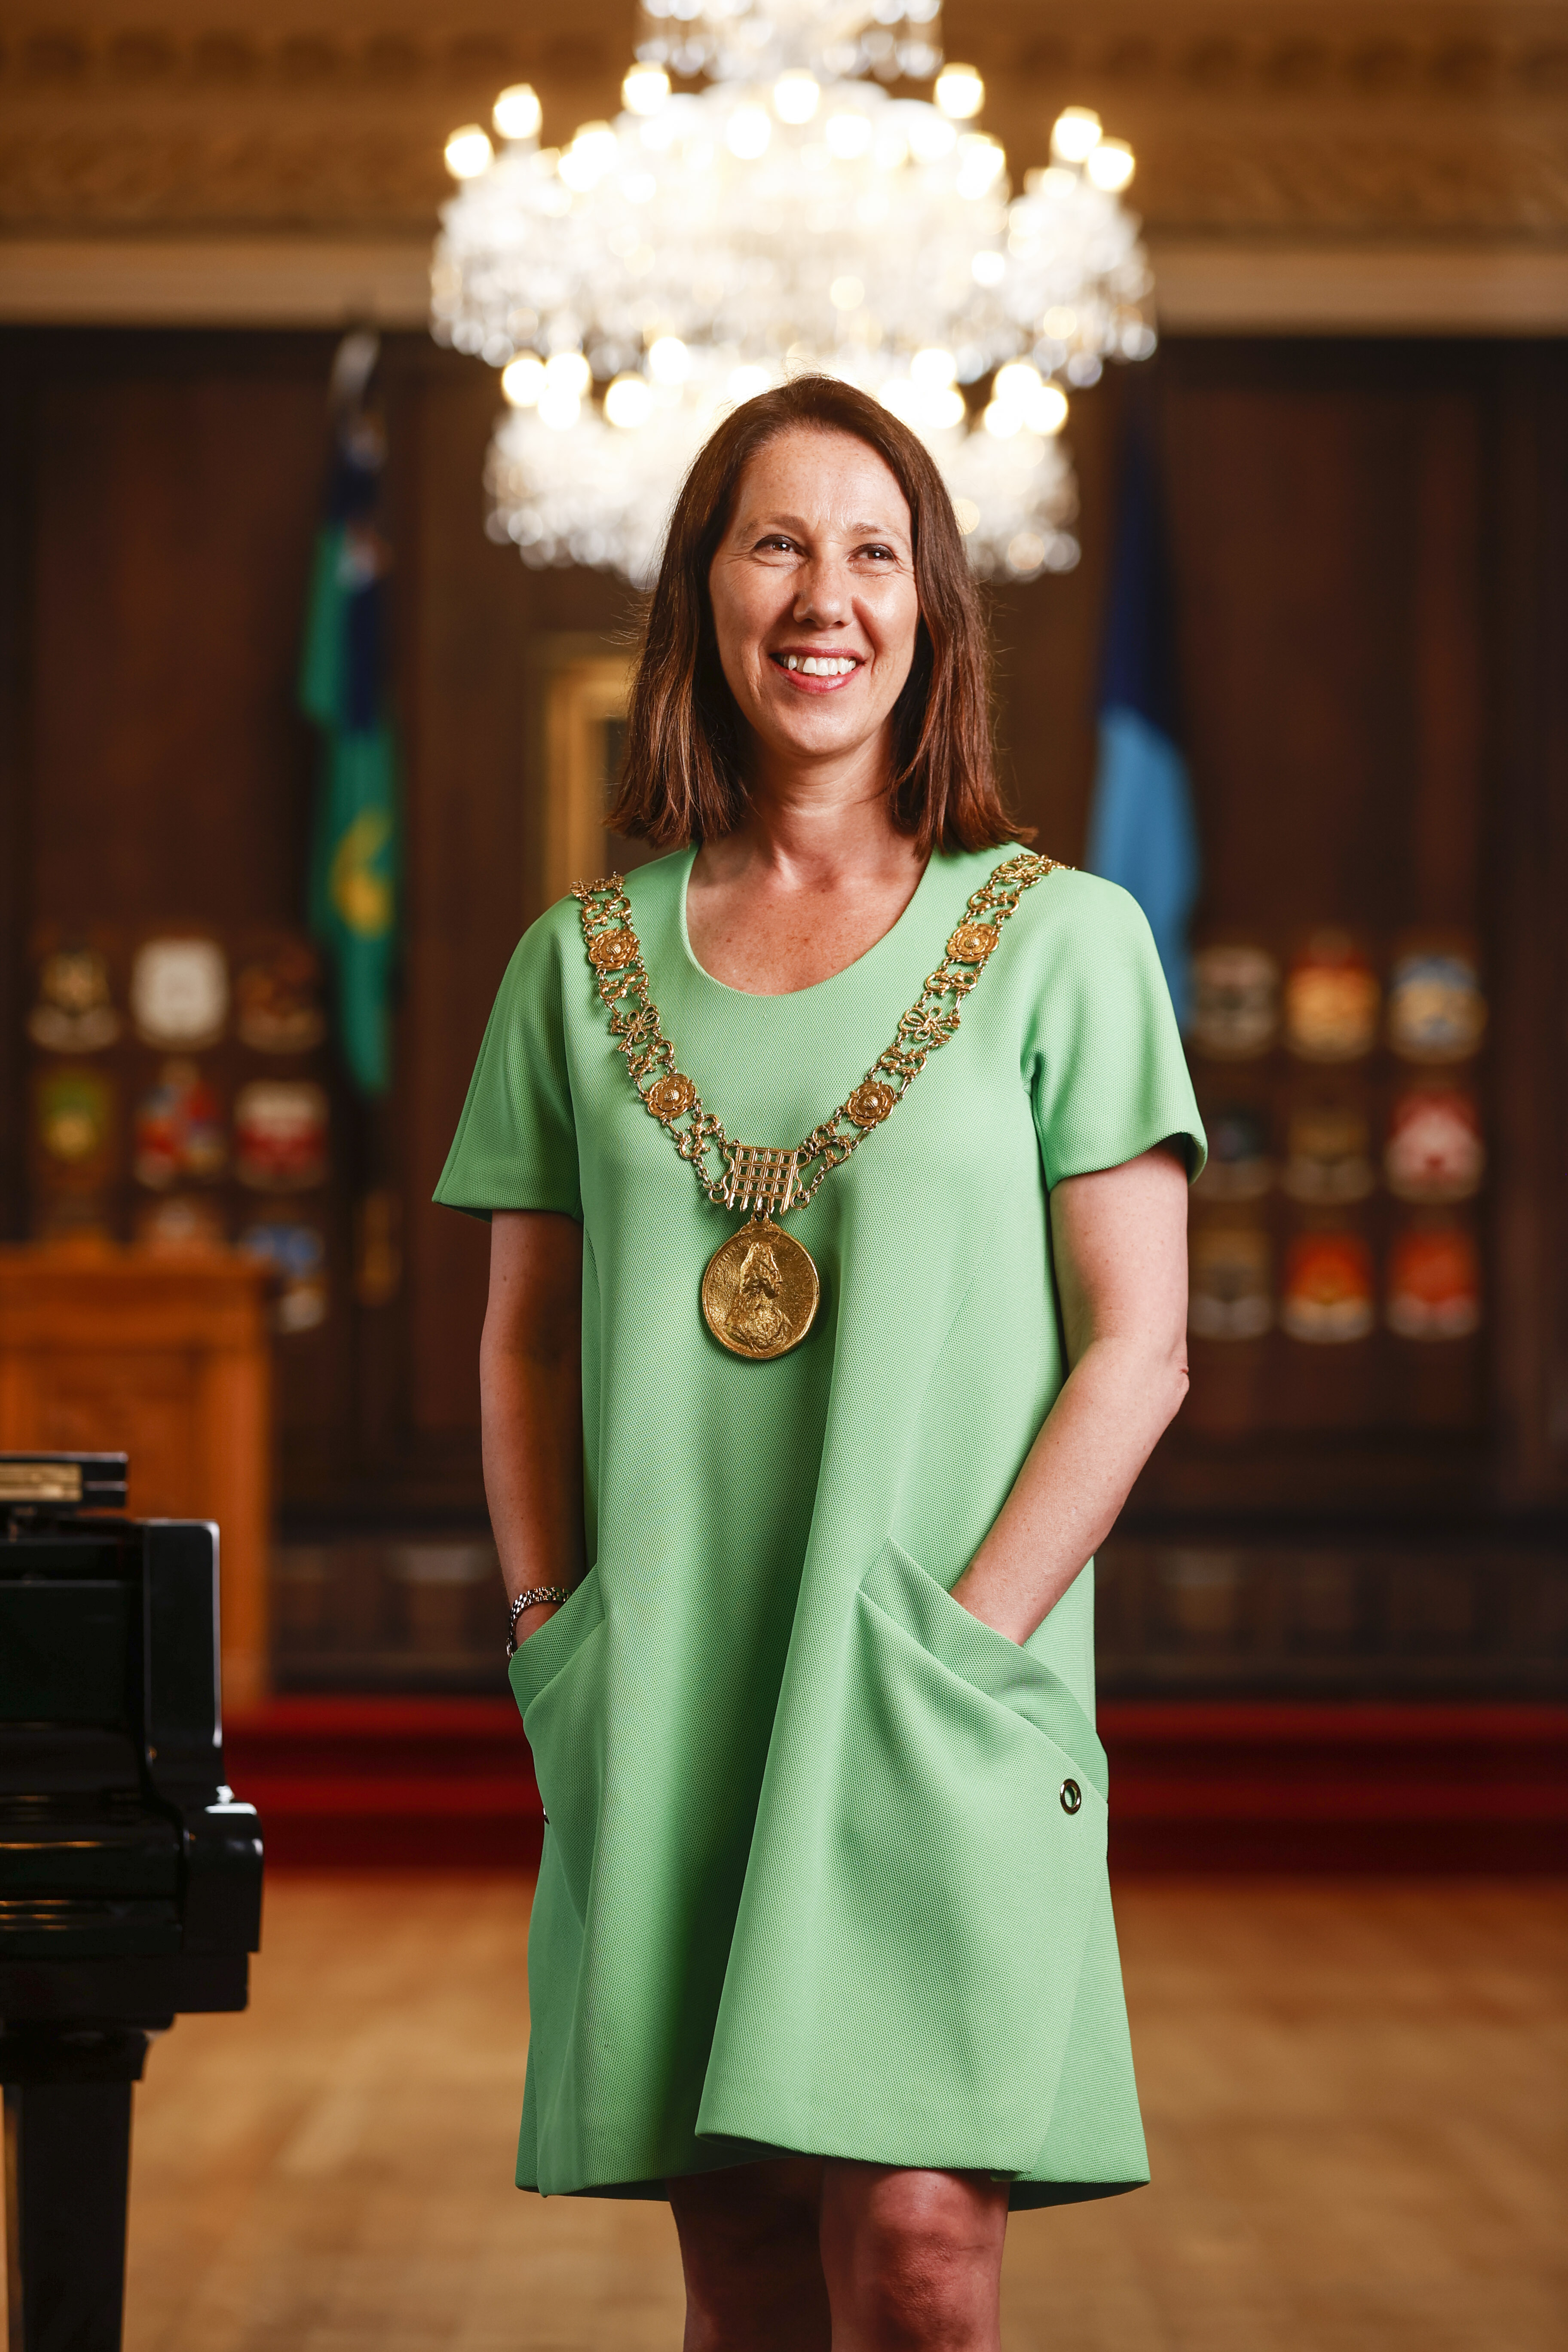 Lord Mayor Alison Gilliland